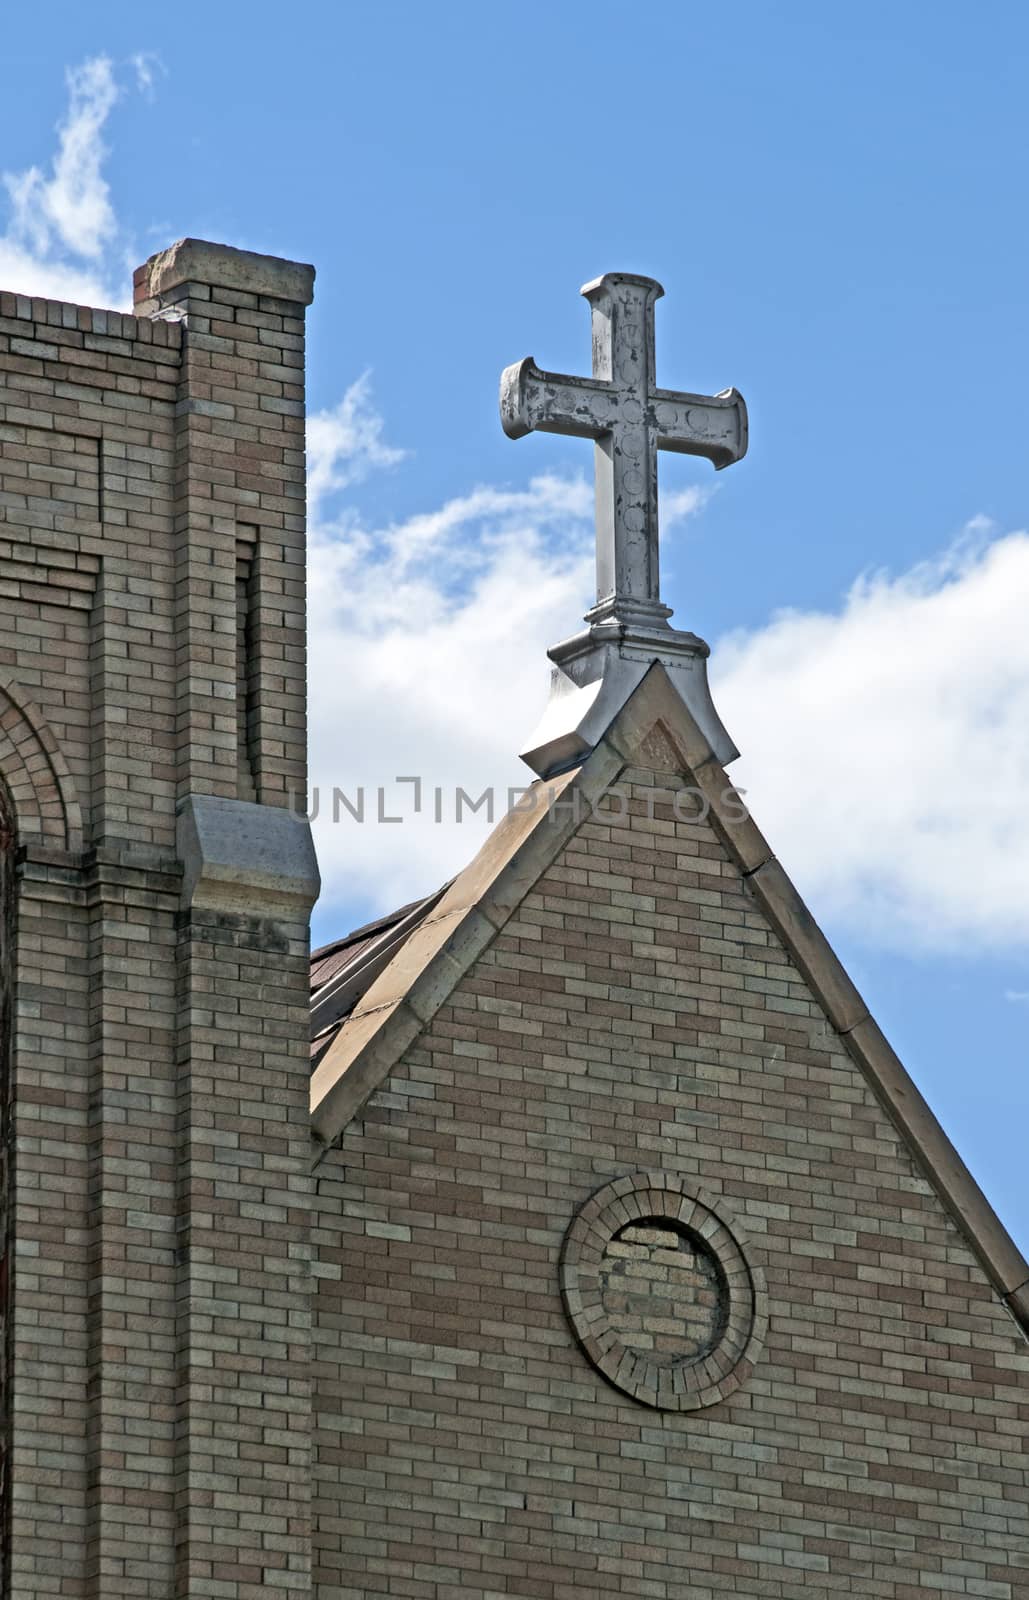 Iron cross on top of a Christain church steeple against a blue sky.